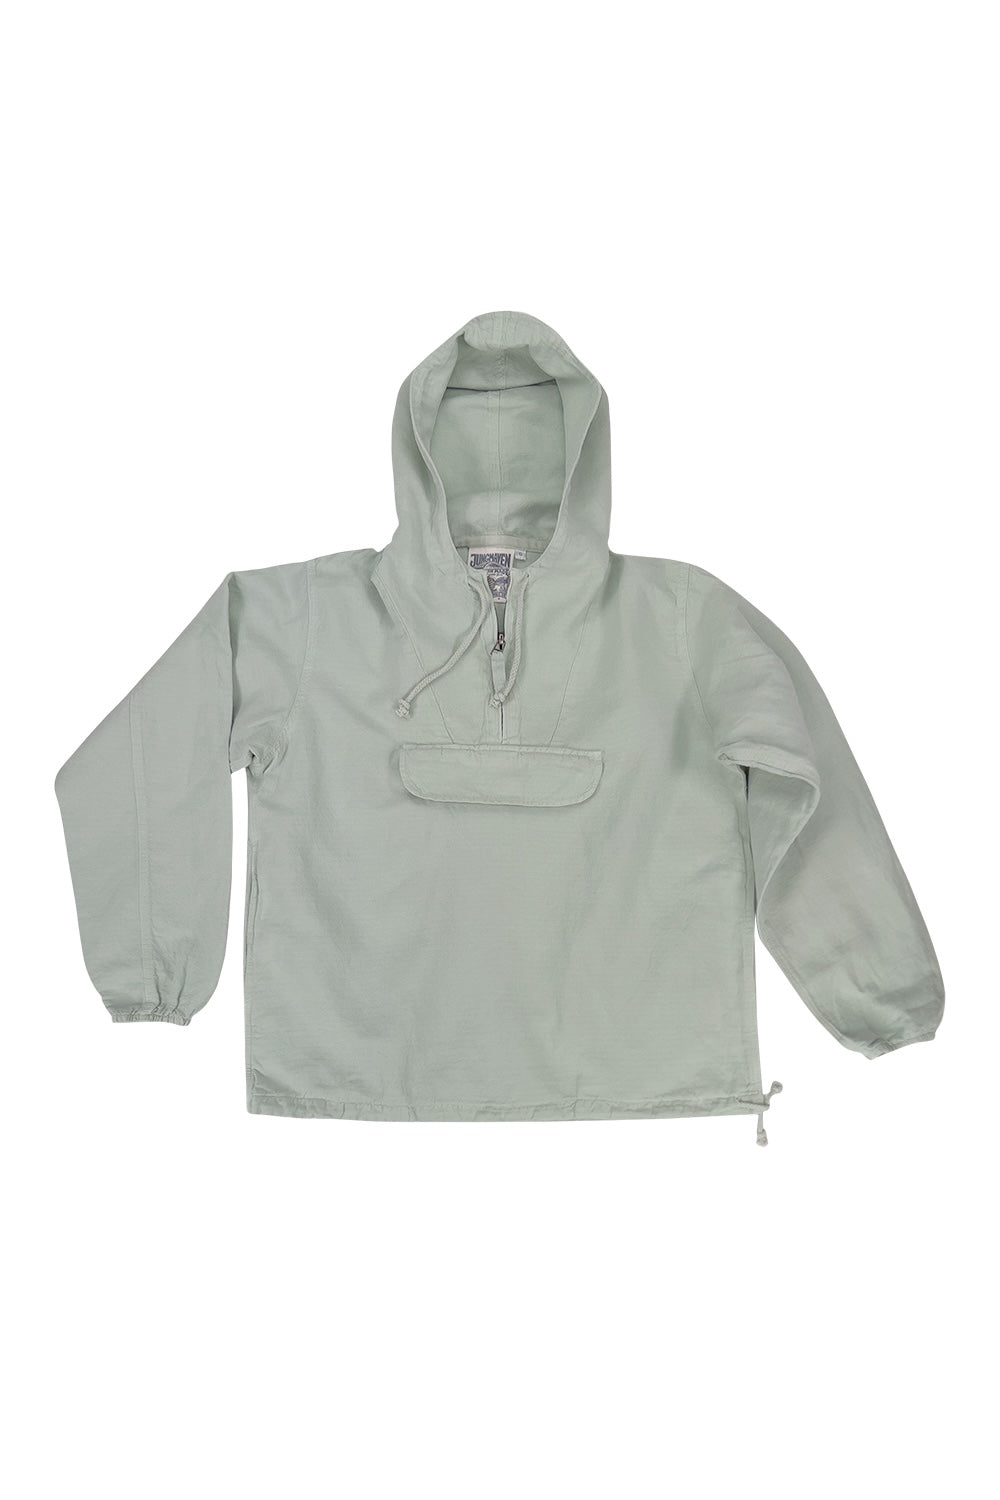 Shoreline Anorak Jacket | Jungmaven Hemp Clothing & Accessories / Color: Seafoam Green